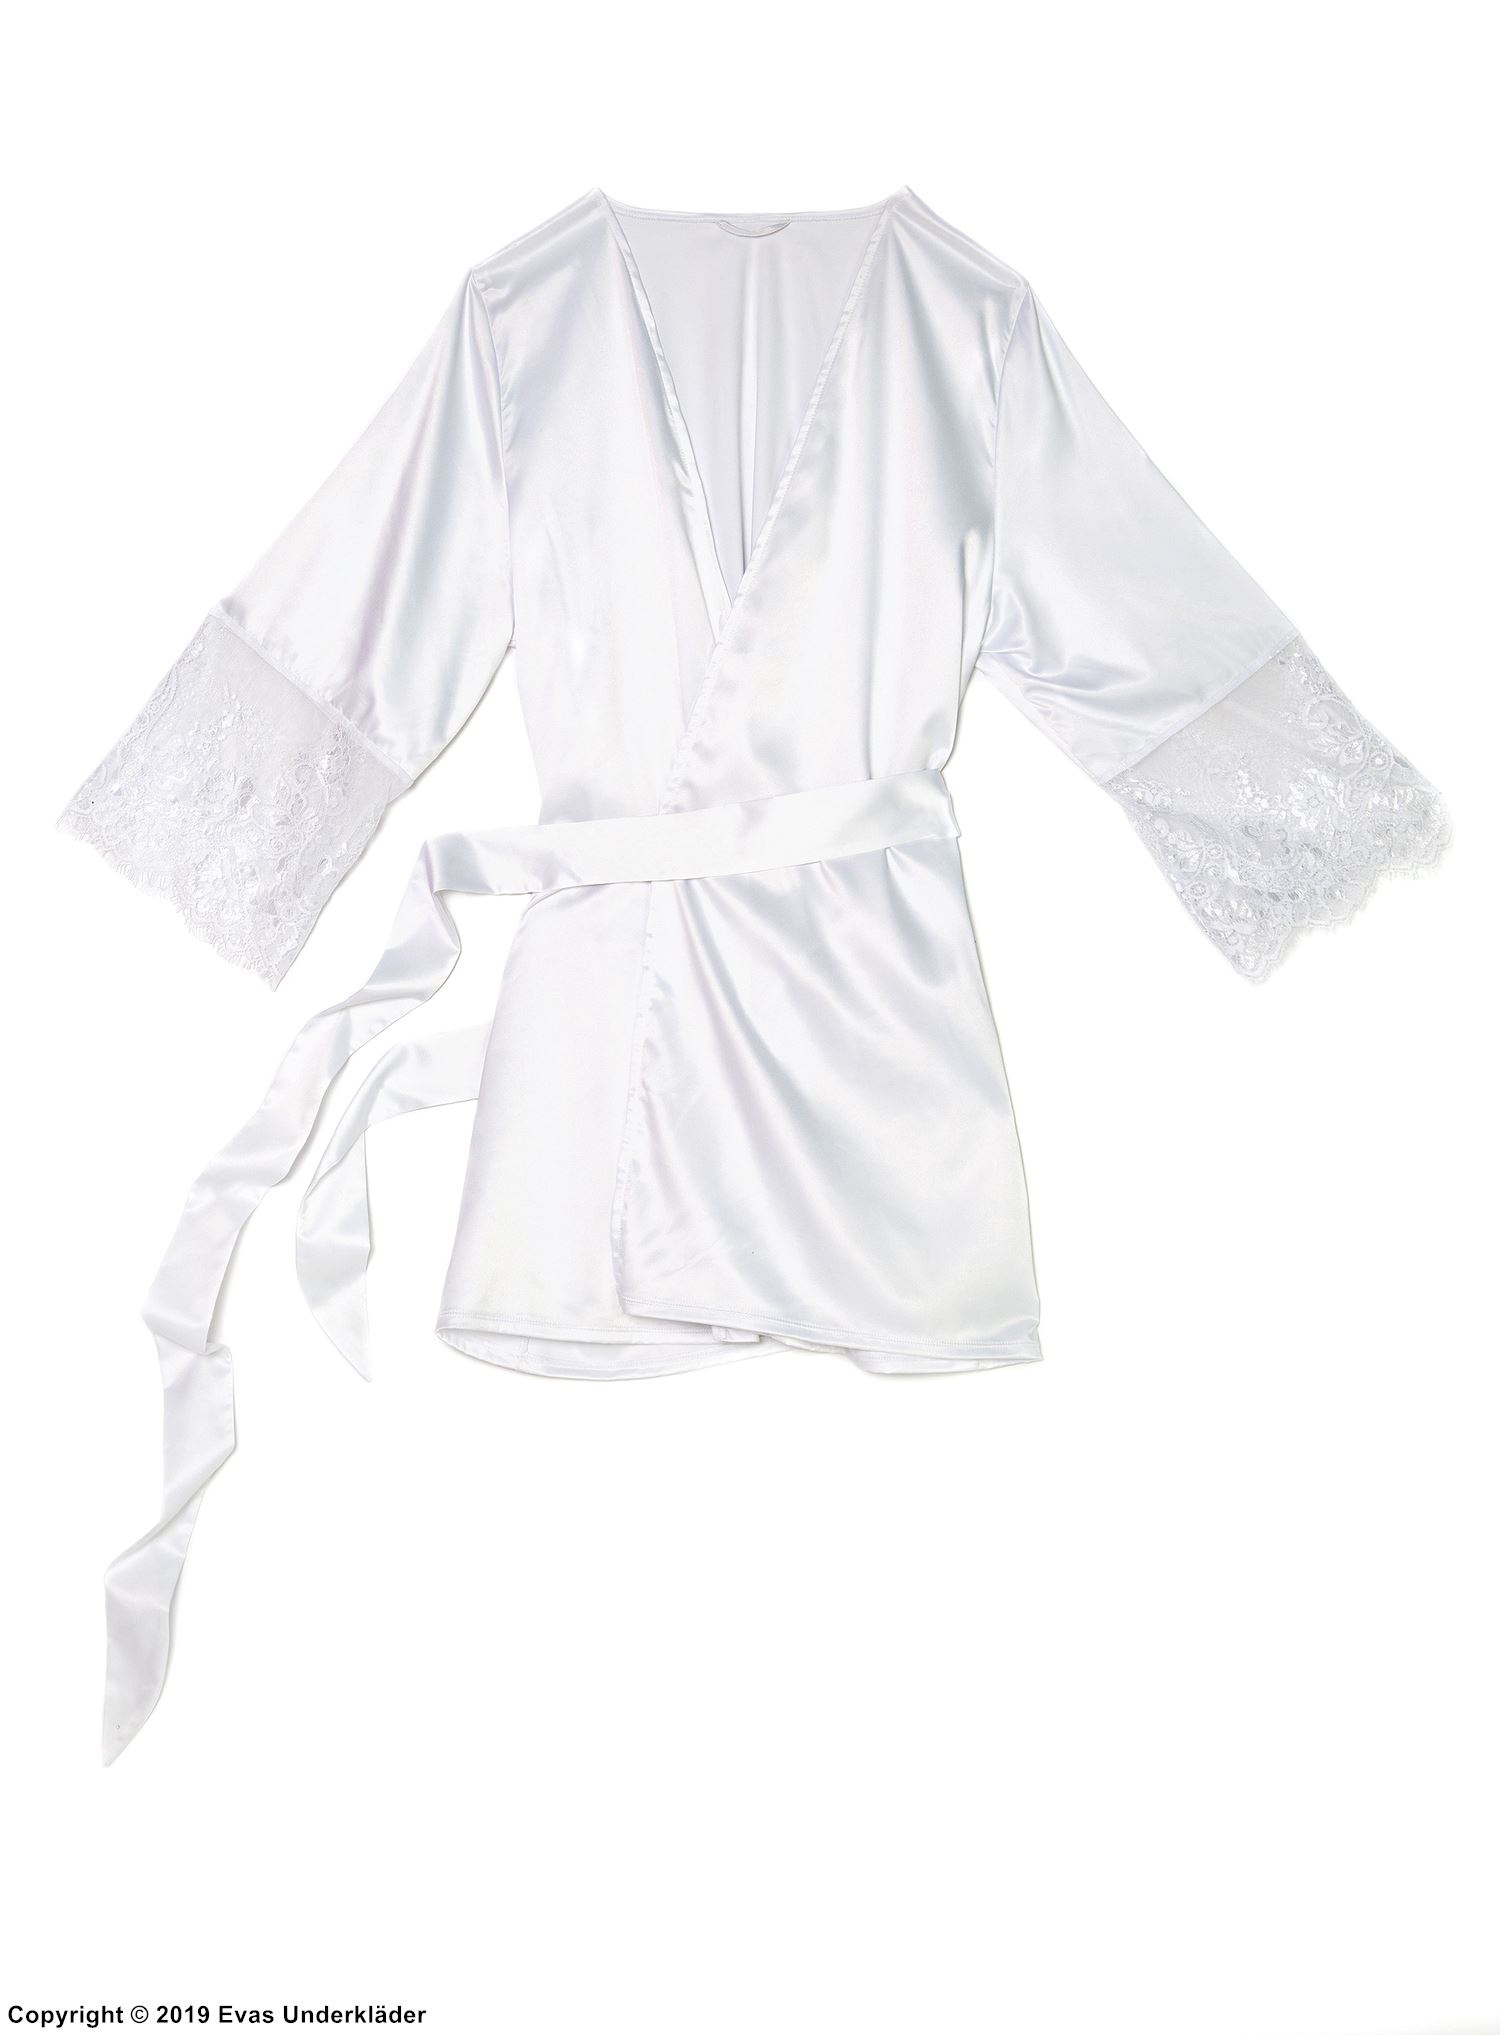 Elegant robe, satin, eyelash lace, sash, plus size